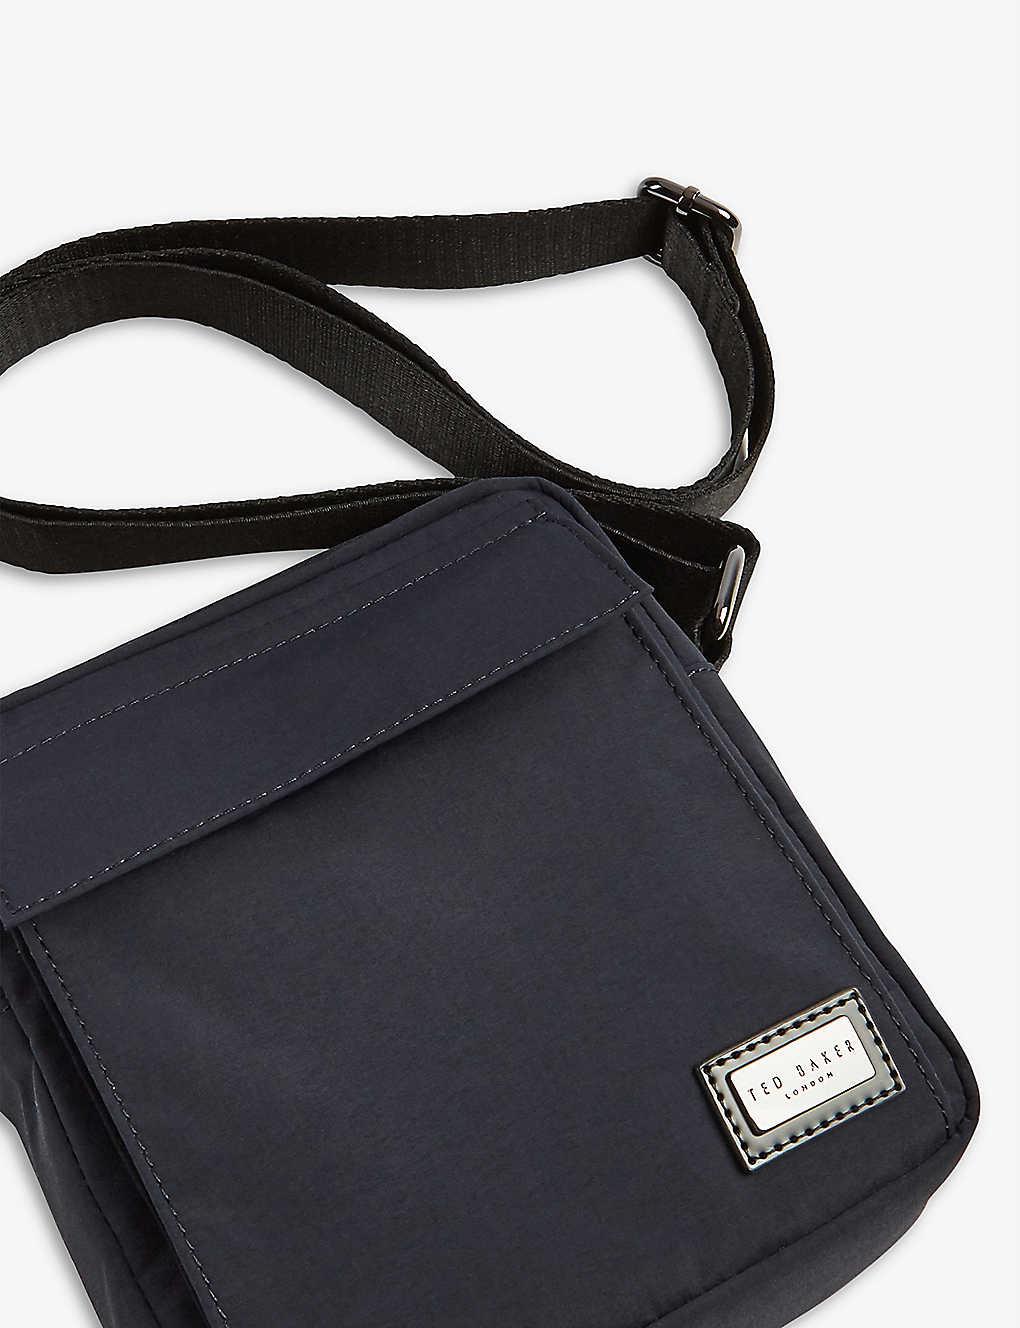 Ted Baker London MATEE Nylon Flight Bag, Black: Handbags